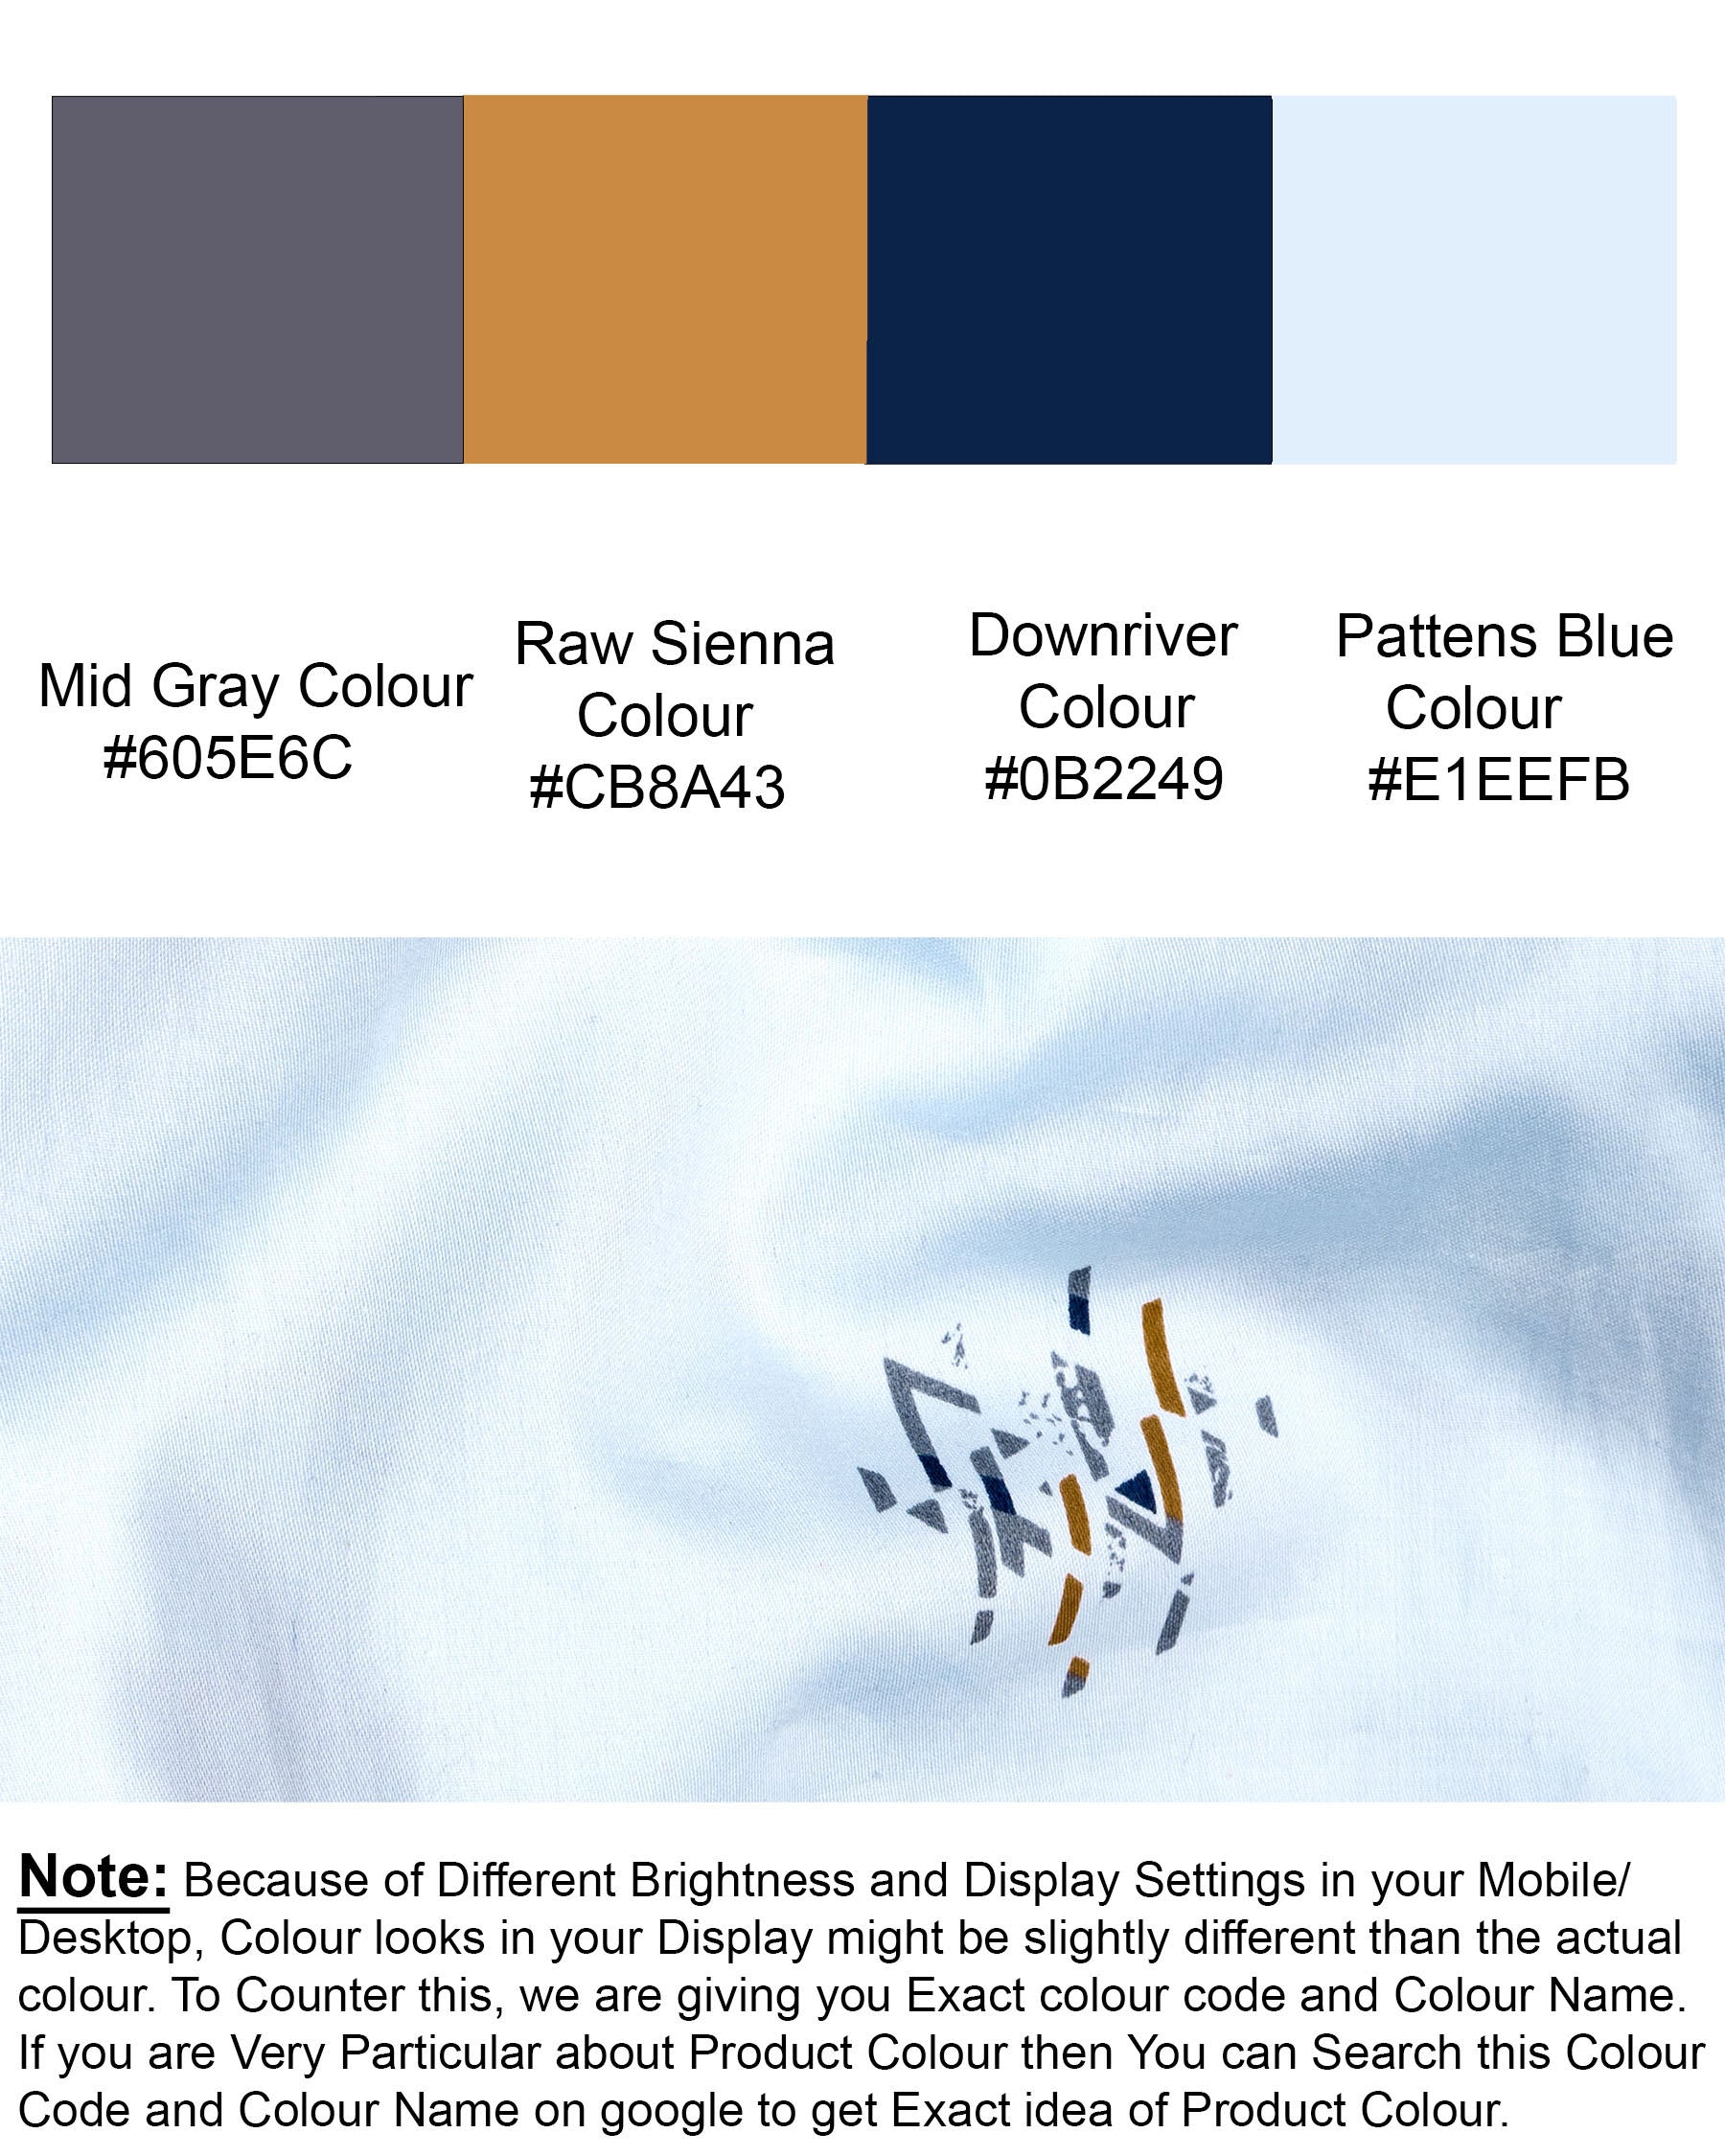 Sky Blue Geographic Printed Super Soft Premium Cotton Shirt 6903-38,6903-38,6903-39,6903-39,6903-40,6903-40,6903-42,6903-42,6903-44,6903-44,6903-46,6903-46,6903-48,6903-48,6903-50,6903-50,6903-52,6903-52